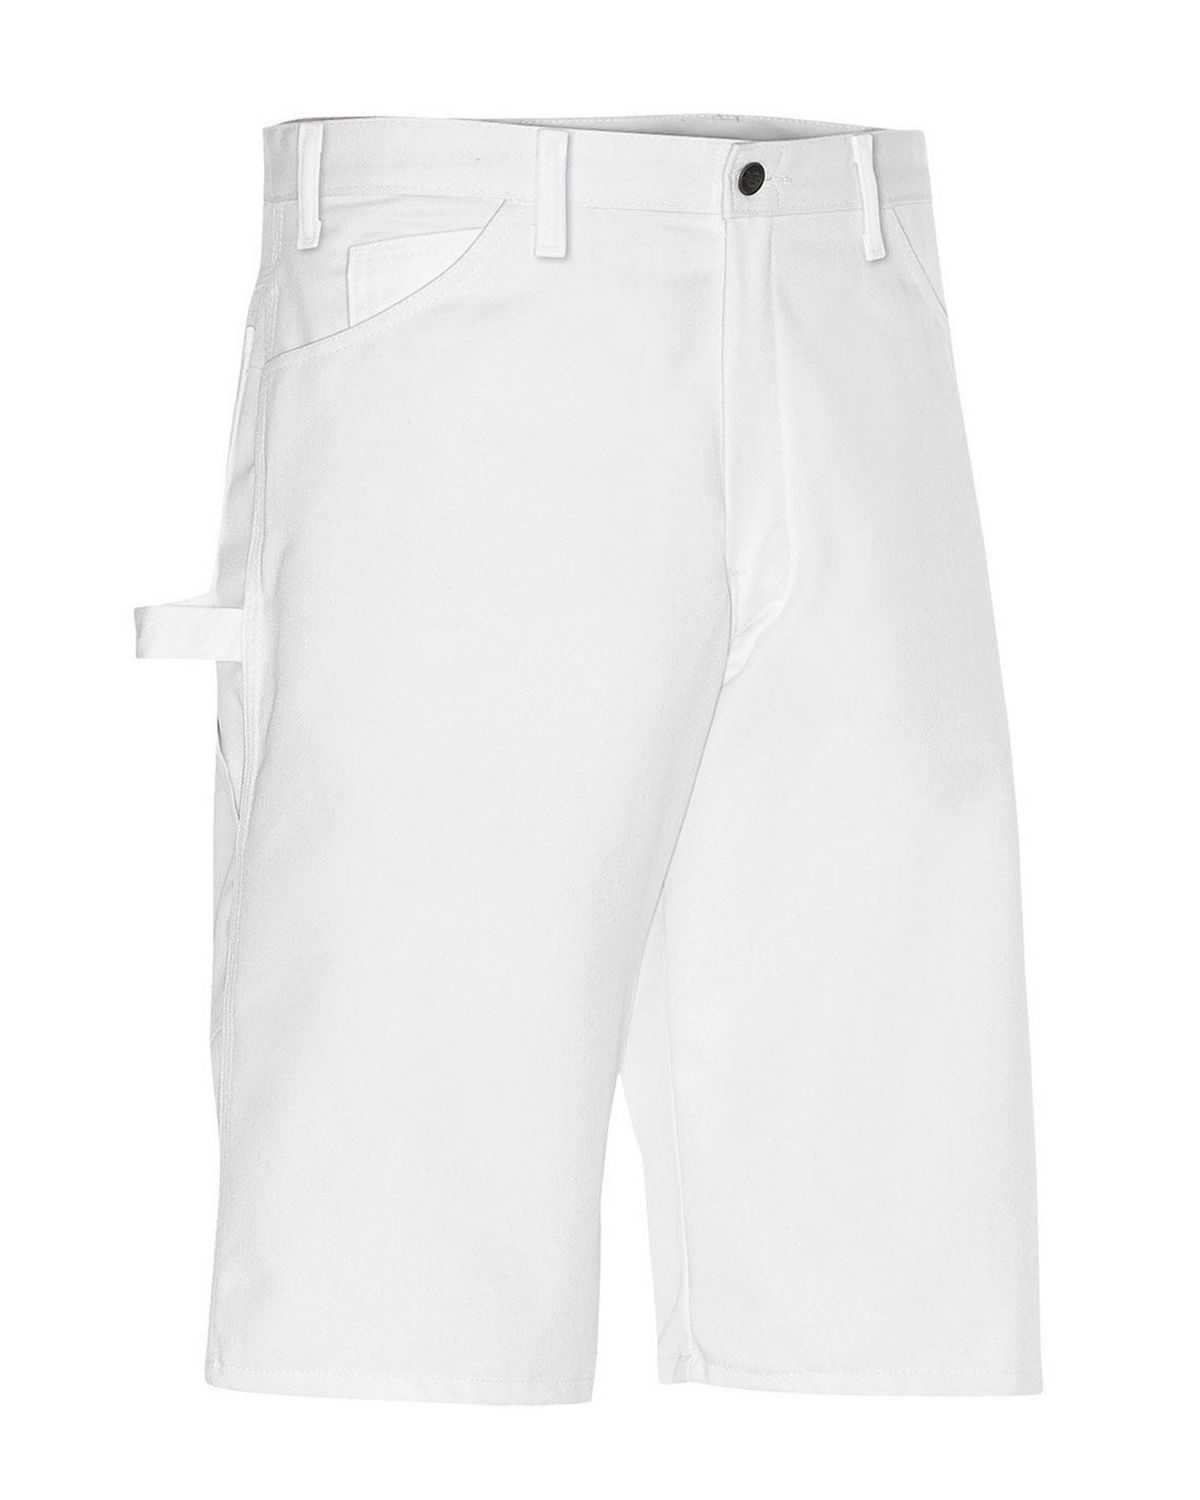 Dickies Premium Painter's Shorts WHITE WR820WH 